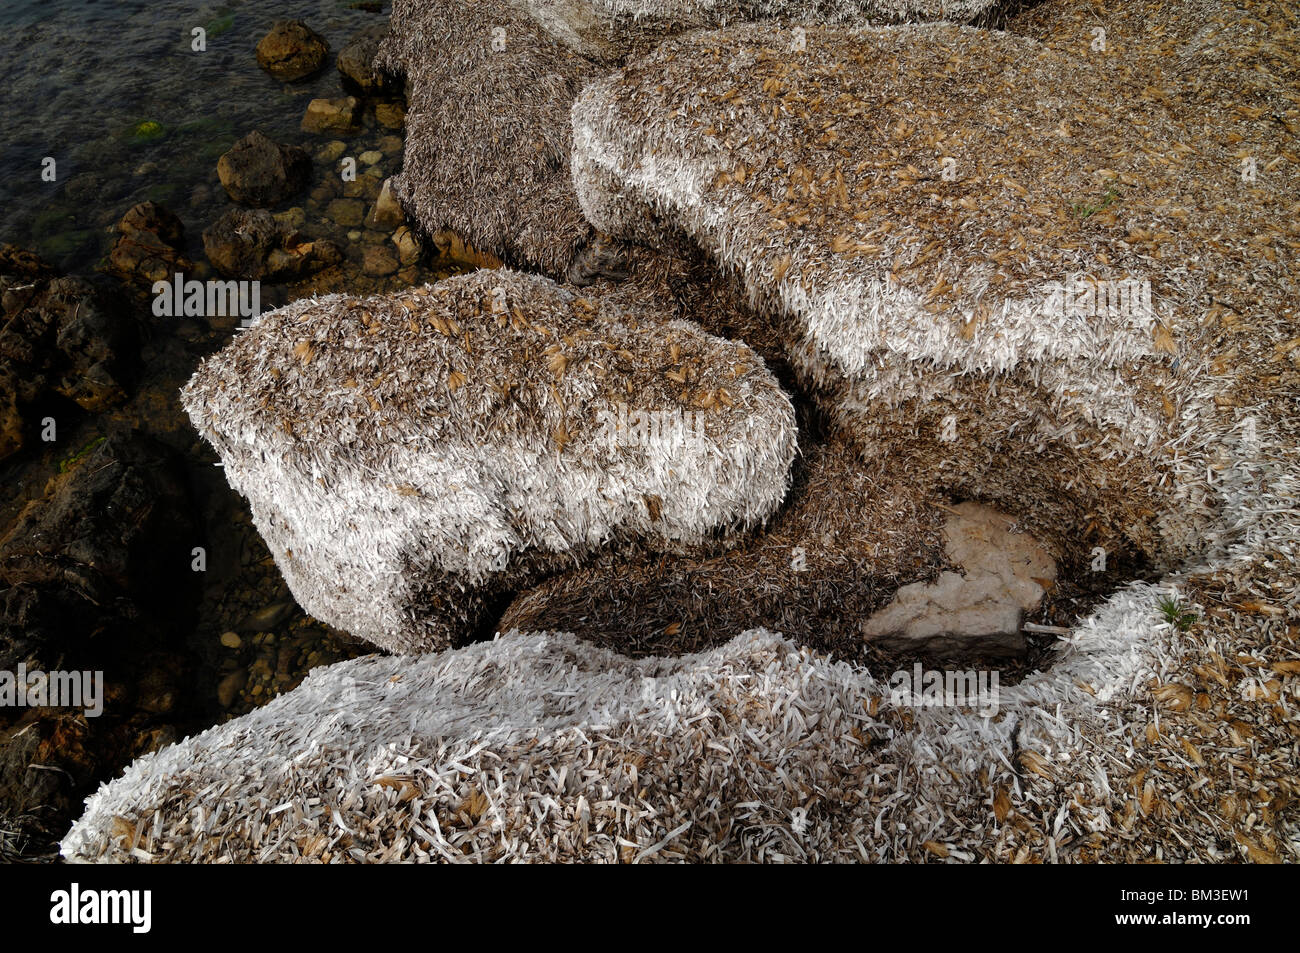 Bed of Dried Seagrass Covering Seashore Rocks on Île Saint Honorat, or Saint Honorat Island, Mediterranean Coast or Shoreline, Côte d'Azur, France Stock Photo